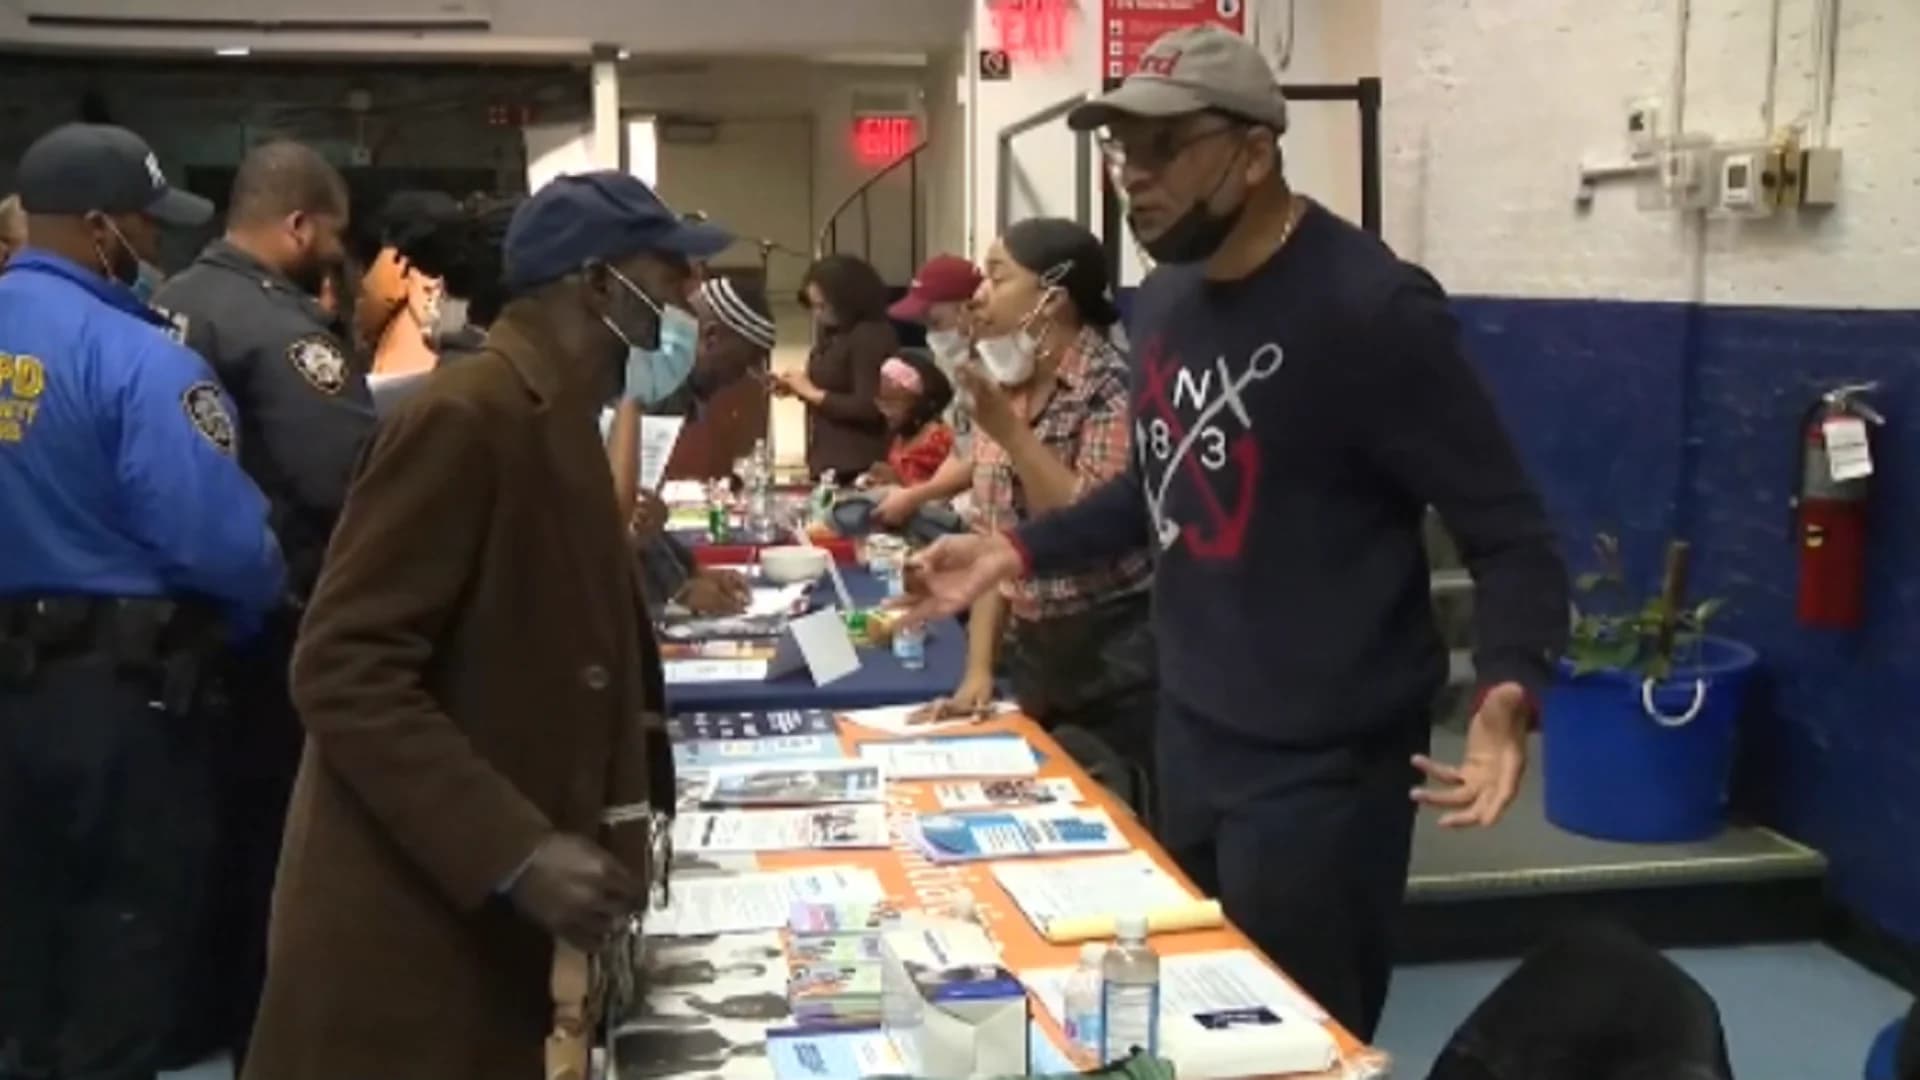 Bronx DA hosts resource fair for ex-inmates re-entering NYC communities